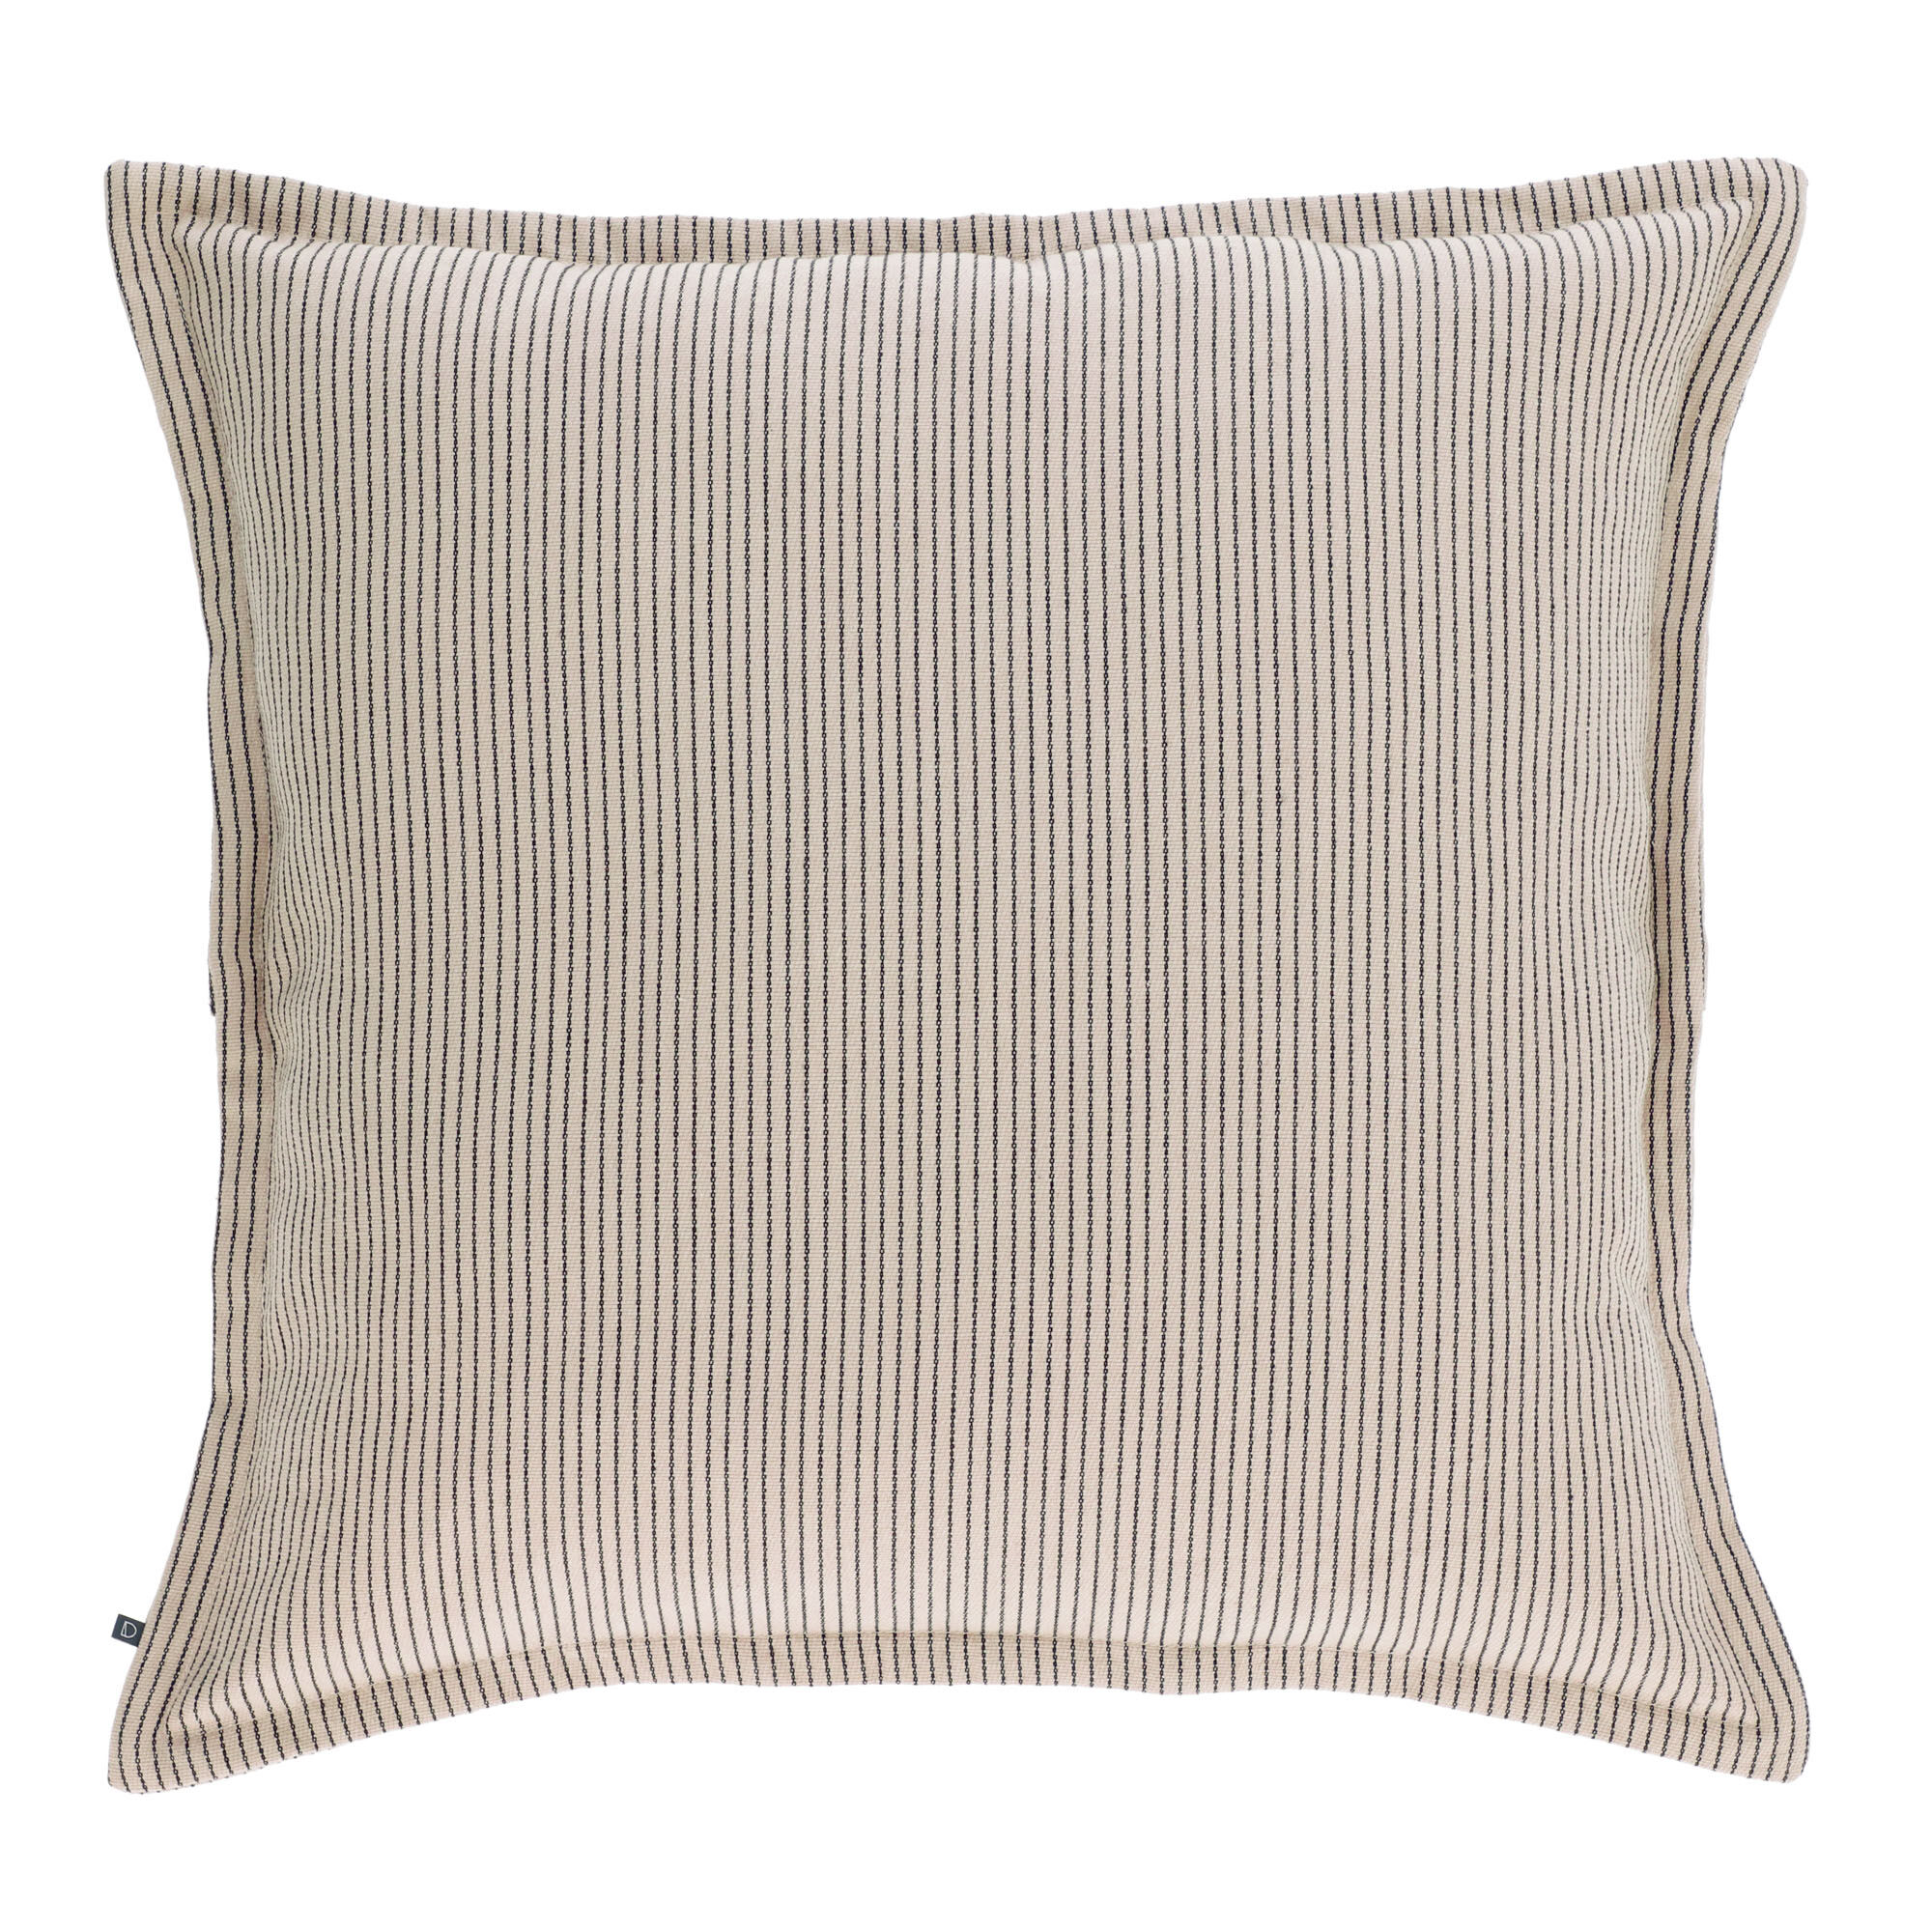 Kave Home Fodera per cuscino Aleria in cotone a righe marrone e beige 60 x 60 cm